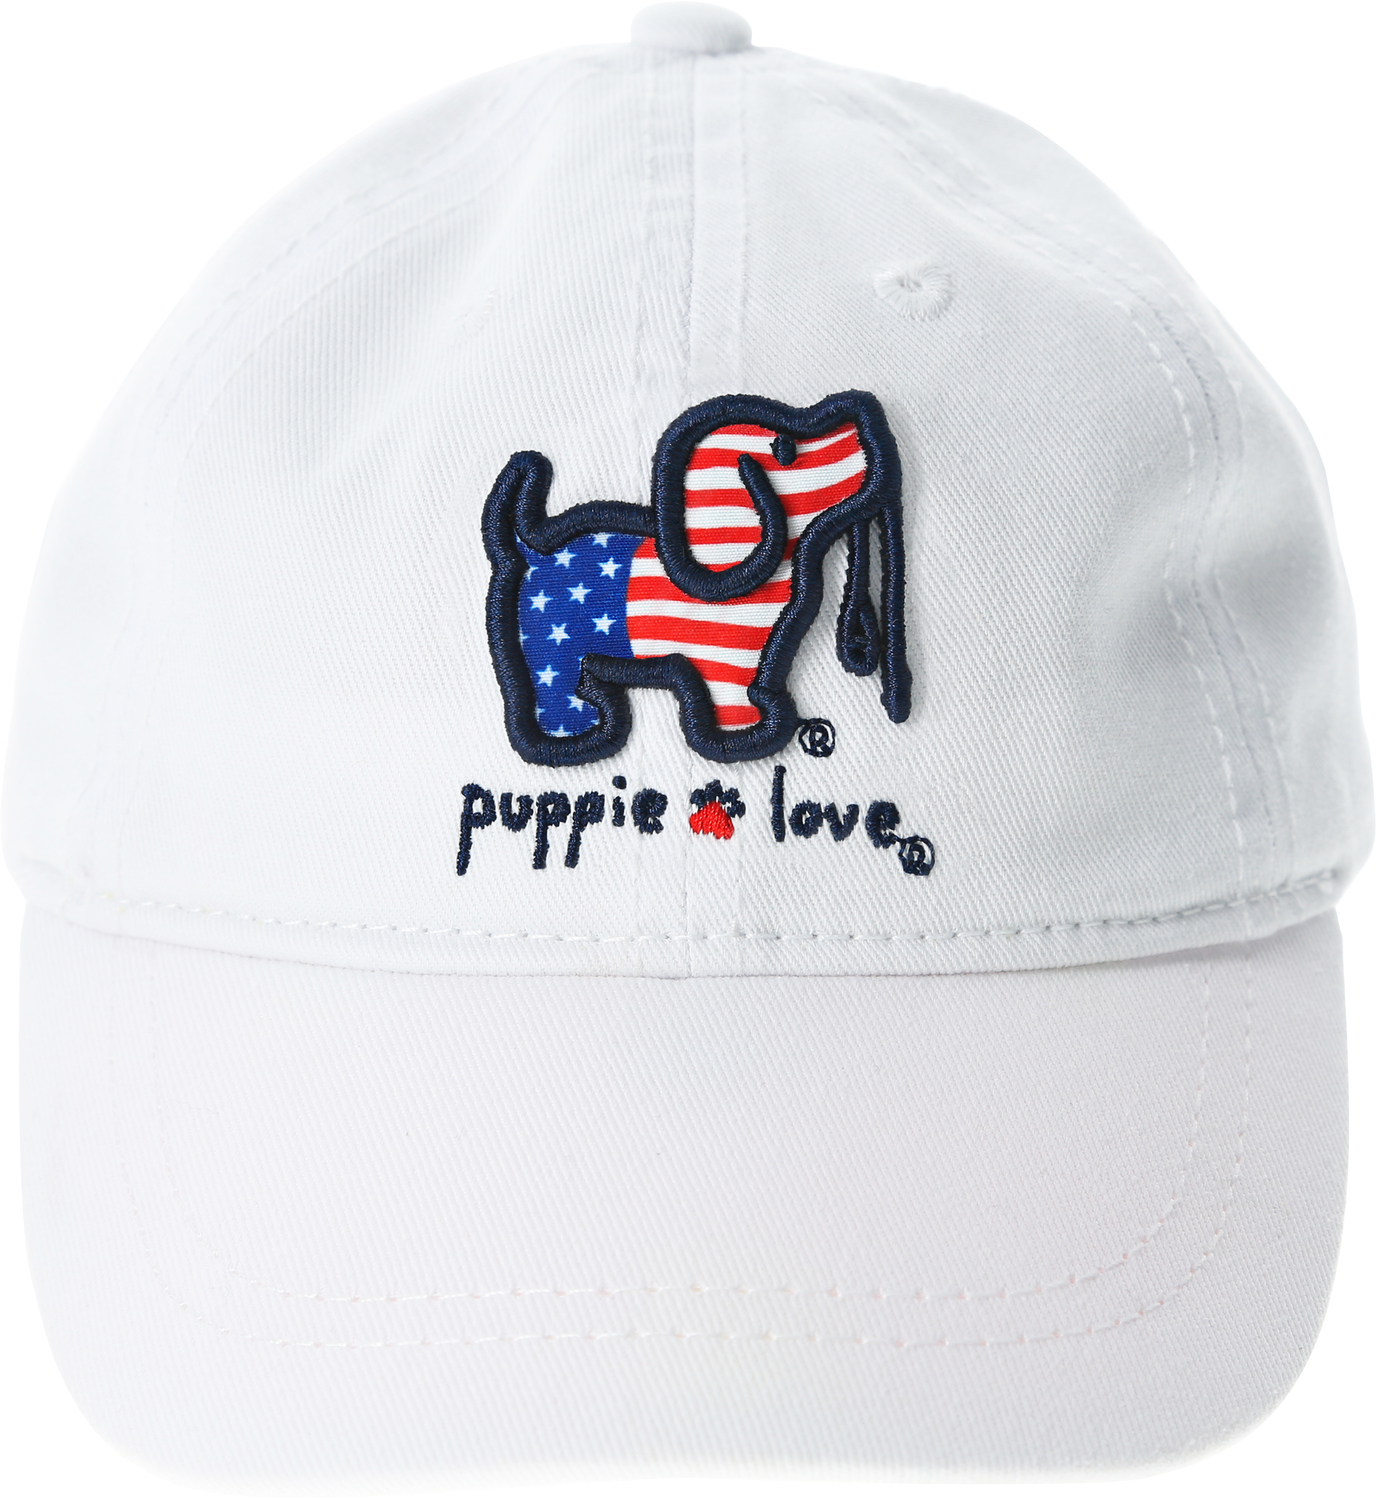 USA by Puppie Love - USA - 18"-19" Adjustable Baby Hat 0-12 Months